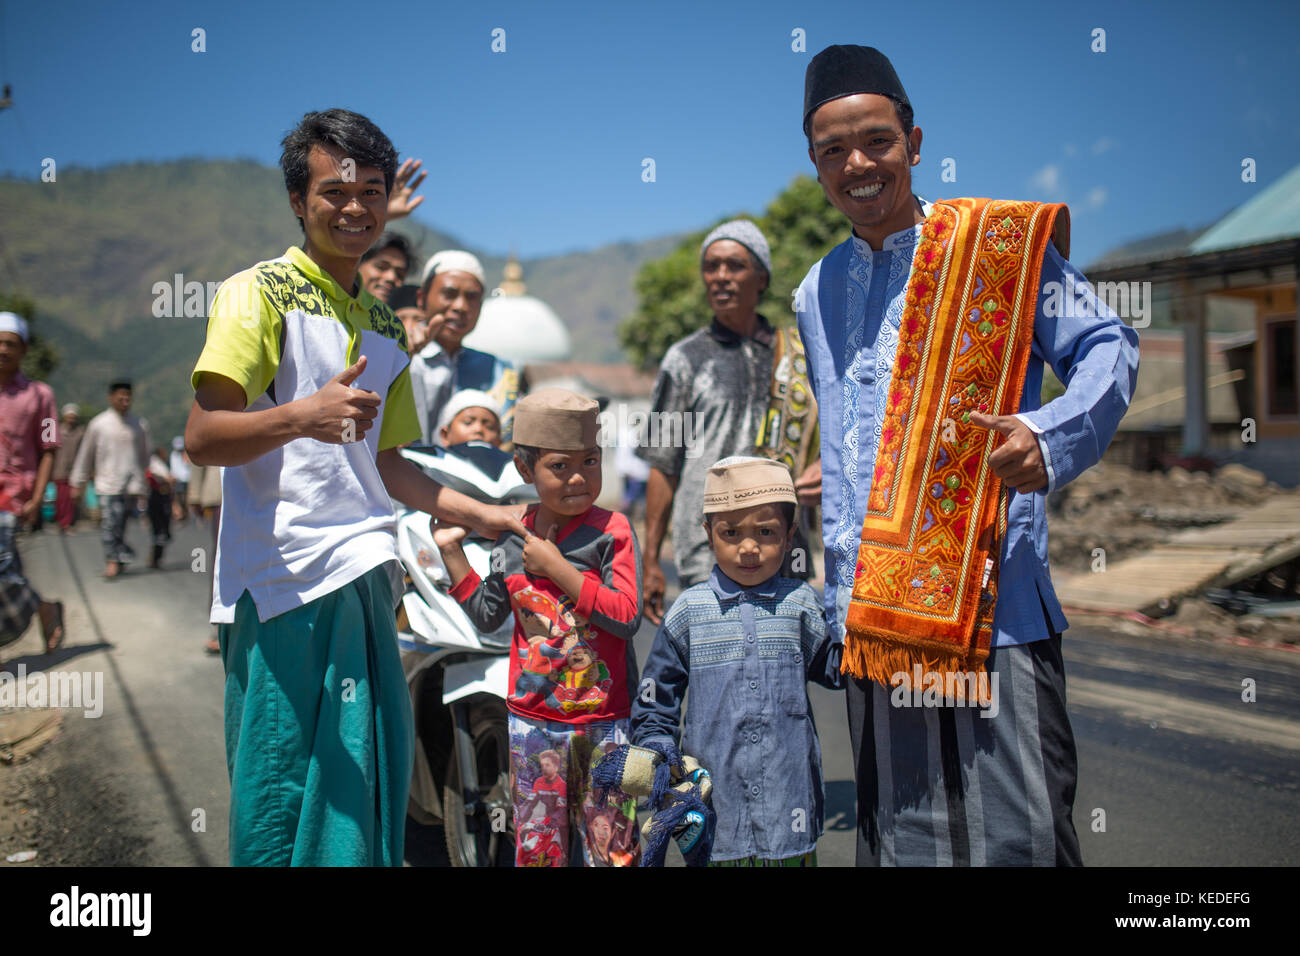 Sembalun Lawang, Lombok, Indonesien - 20. August 2017 - muslimische Männer, die nach dem Gebet in Sembalun Lawang auf der Insel Lombok, Indonesien, auf der Straße unterwegs waren. Stockfoto